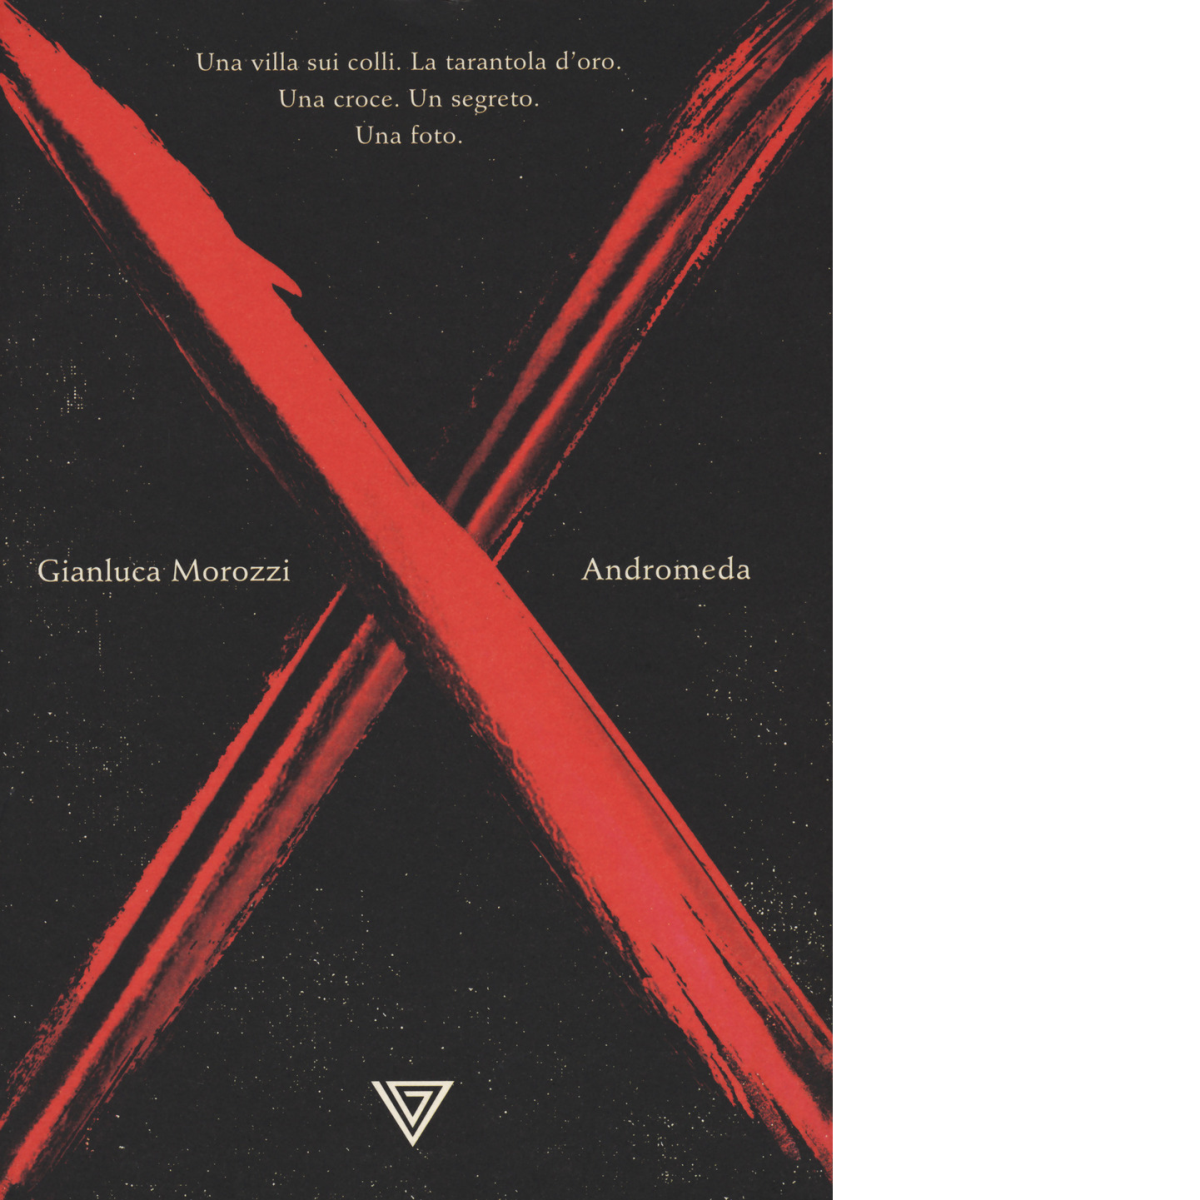 Andromeda - Gianluca Morozzi - Perrone editore, 2020